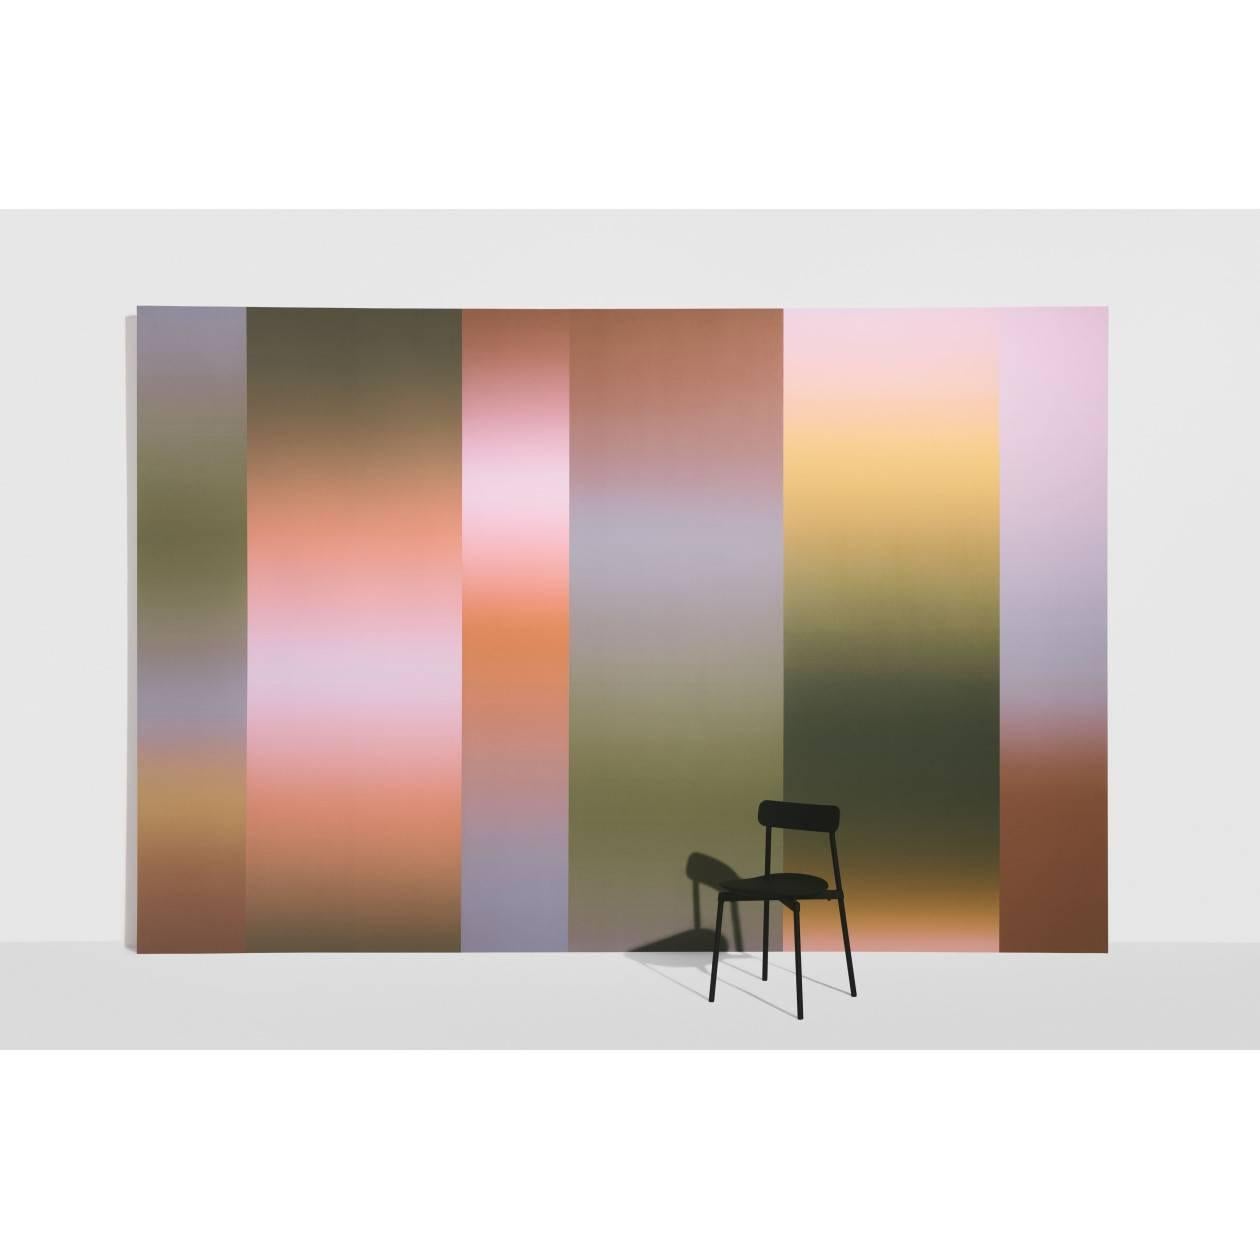 Paper PETITE FRITURE Panorama Wallpaper Ombré, Evening Part 1, by Carole Baijings